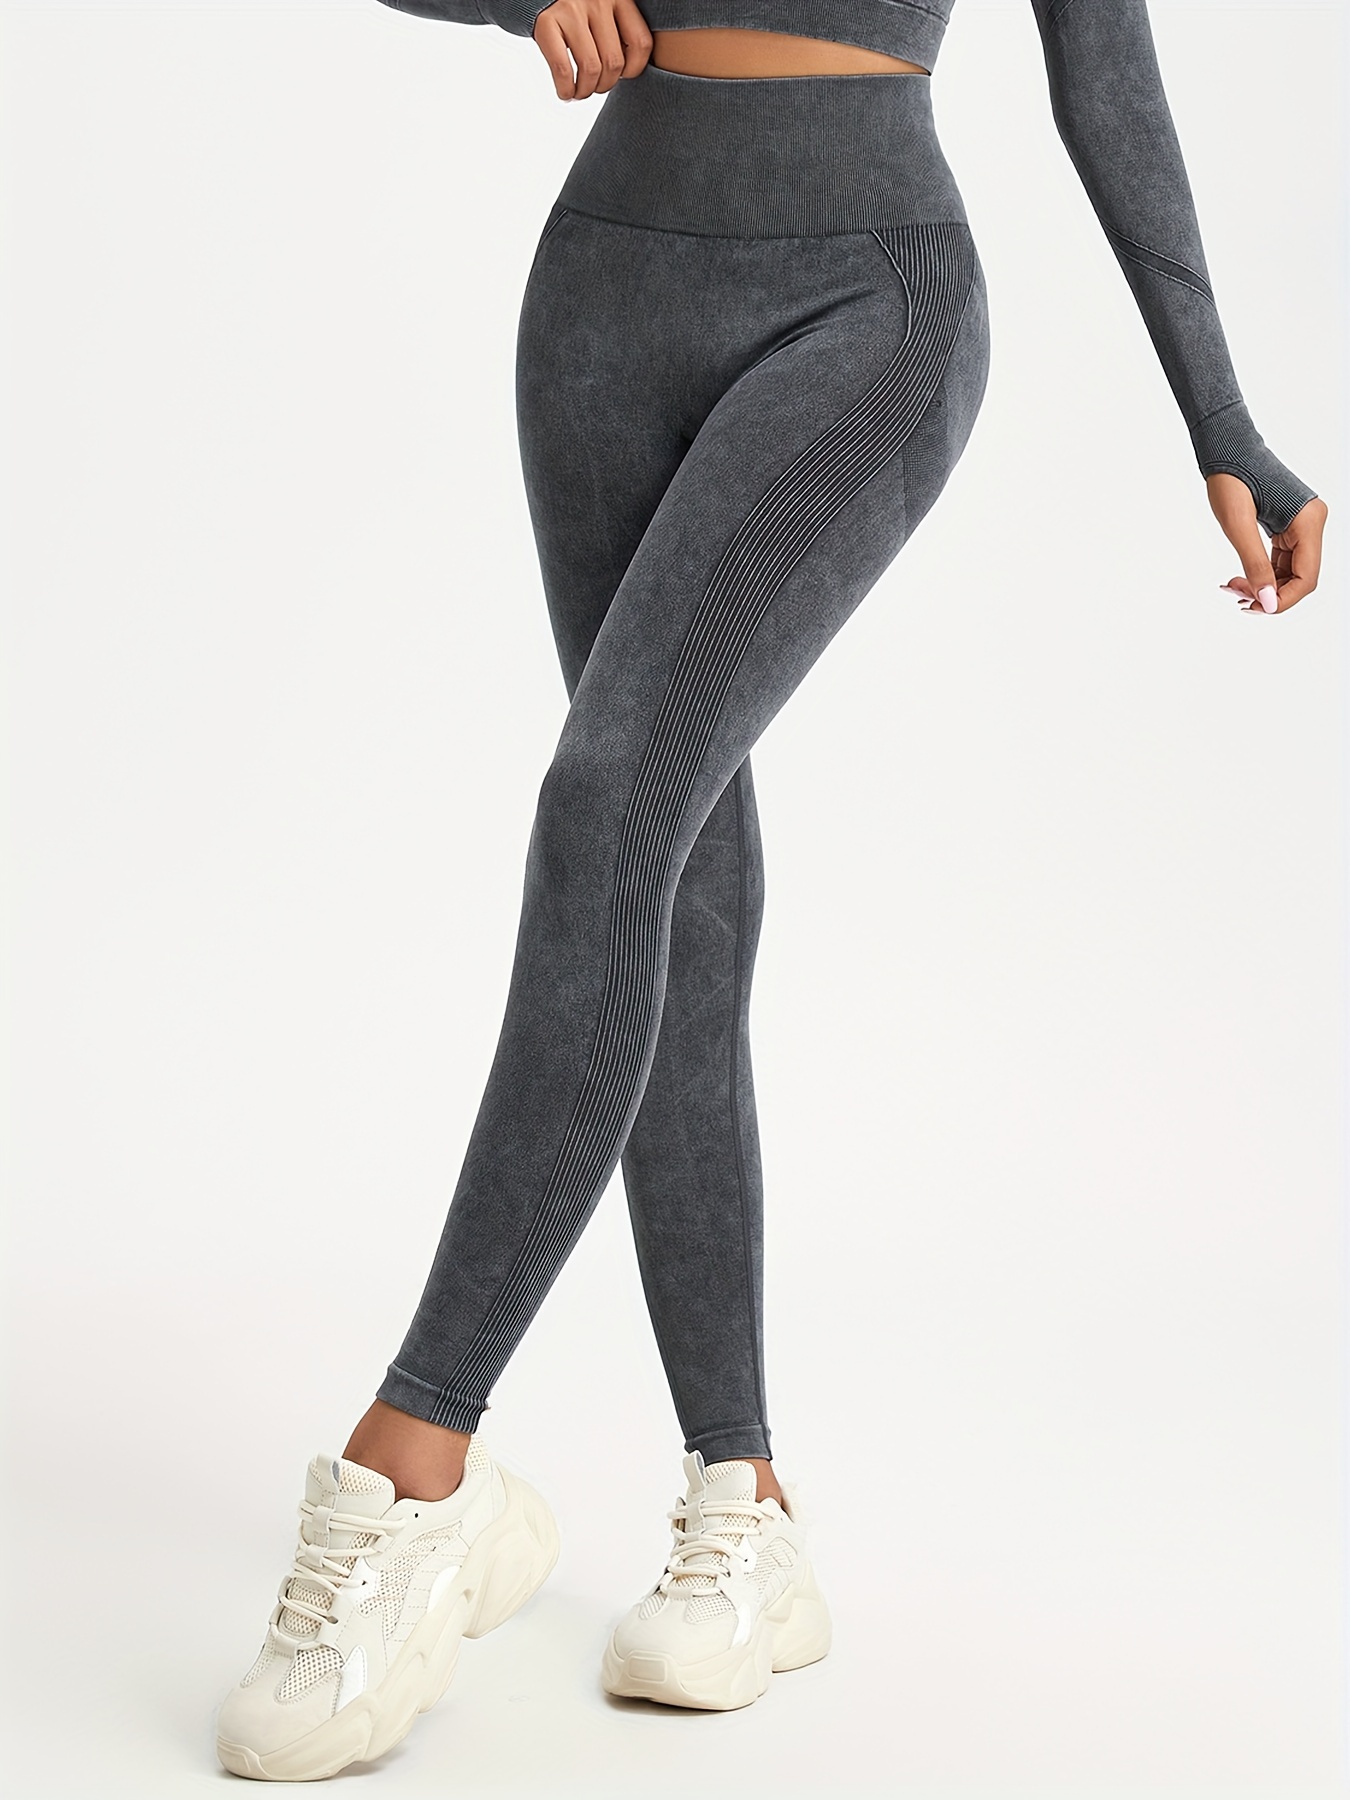 Pantalon Nike Yoga Mujer Gris